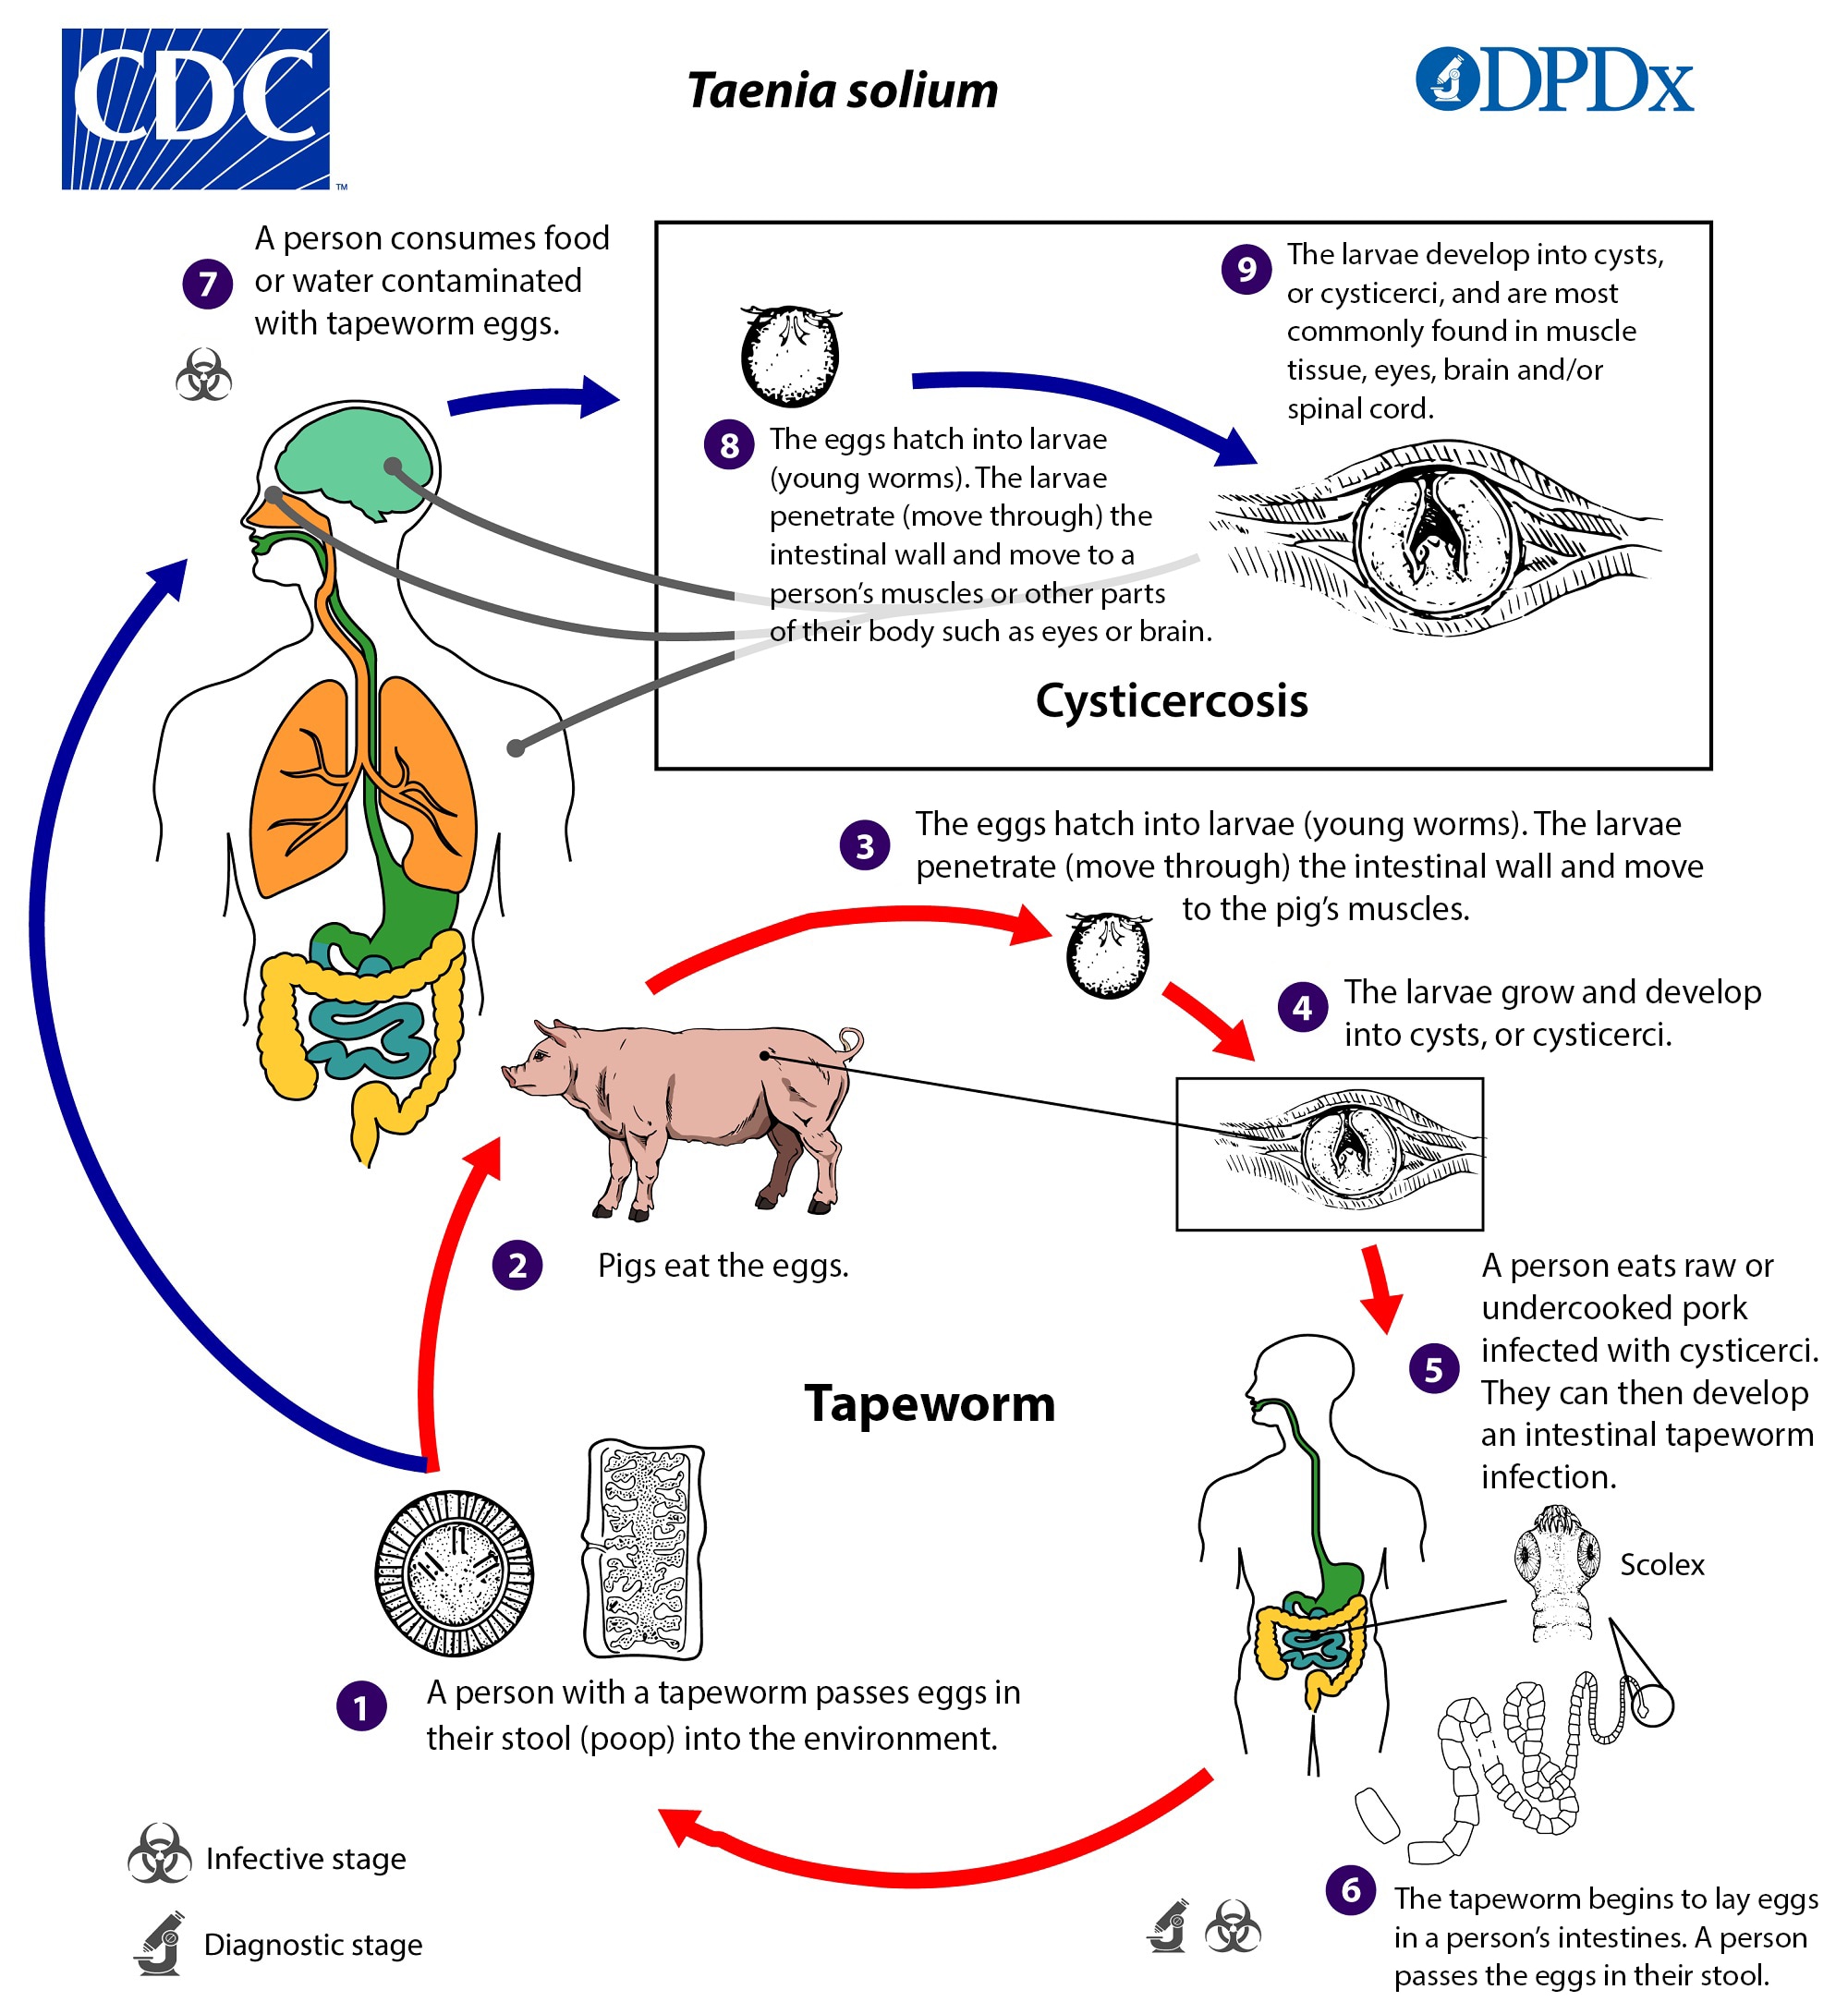 Life cycle stages of Taenia solium parasite.